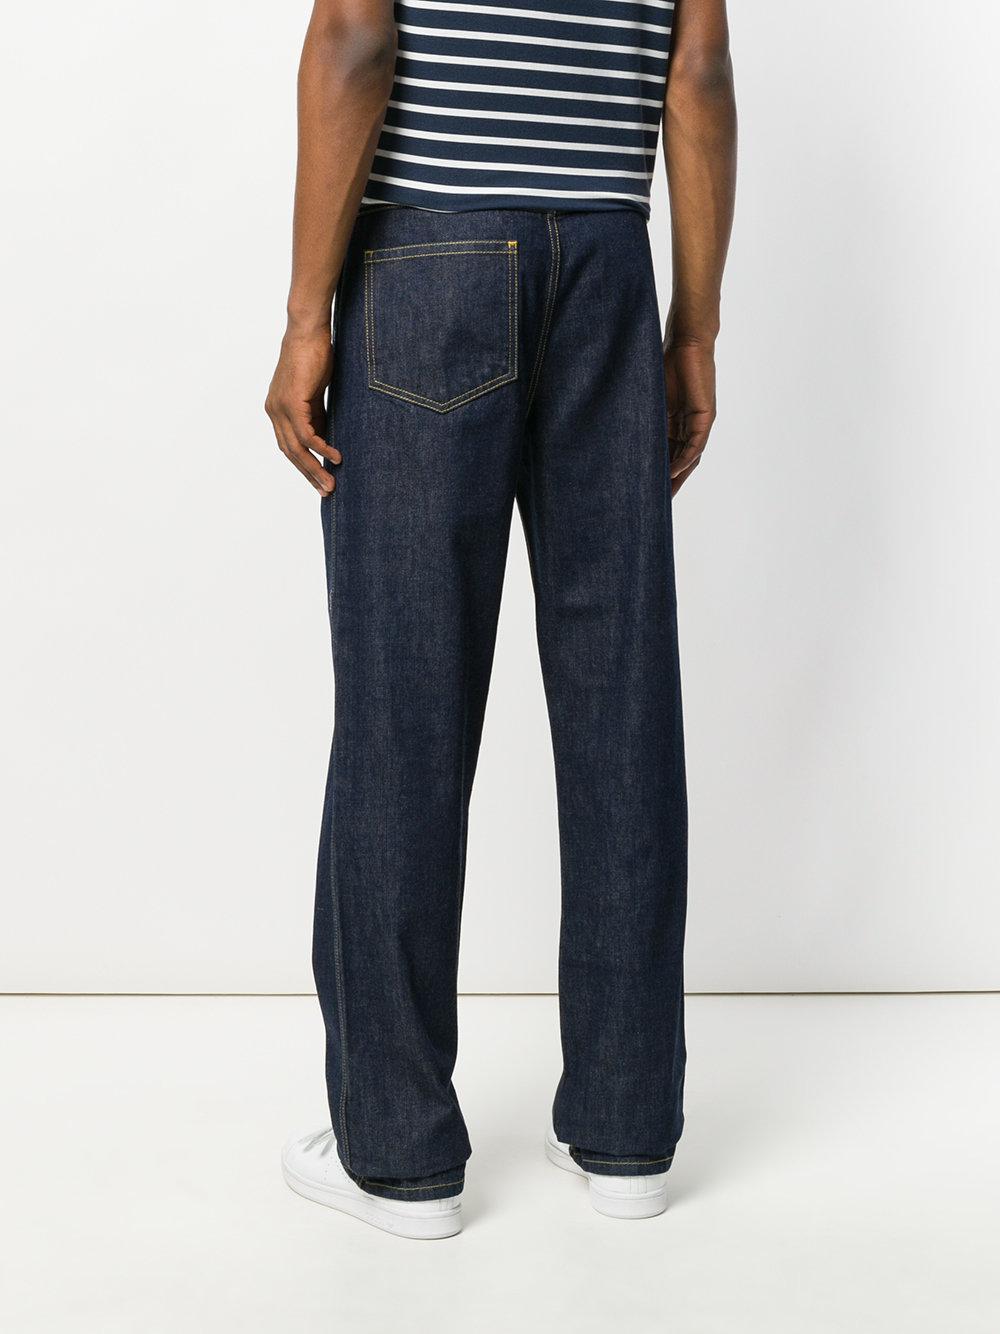 CALVIN KLEIN 205W39NYC Denim Bootcut Jeans in Blue for Men - Lyst